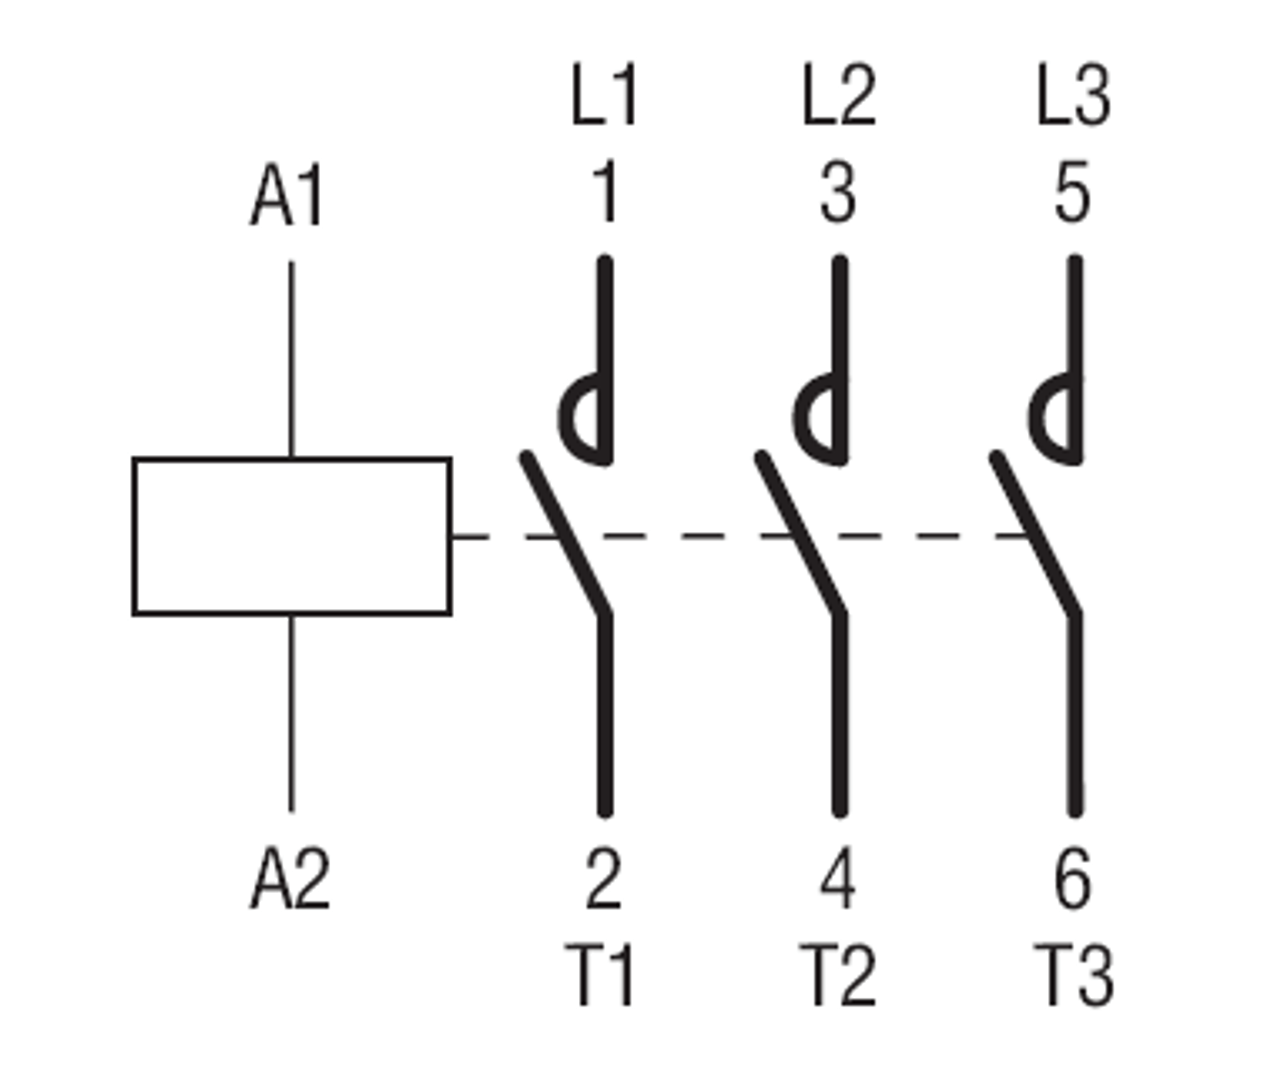 XTCE040D00W wiring diagram